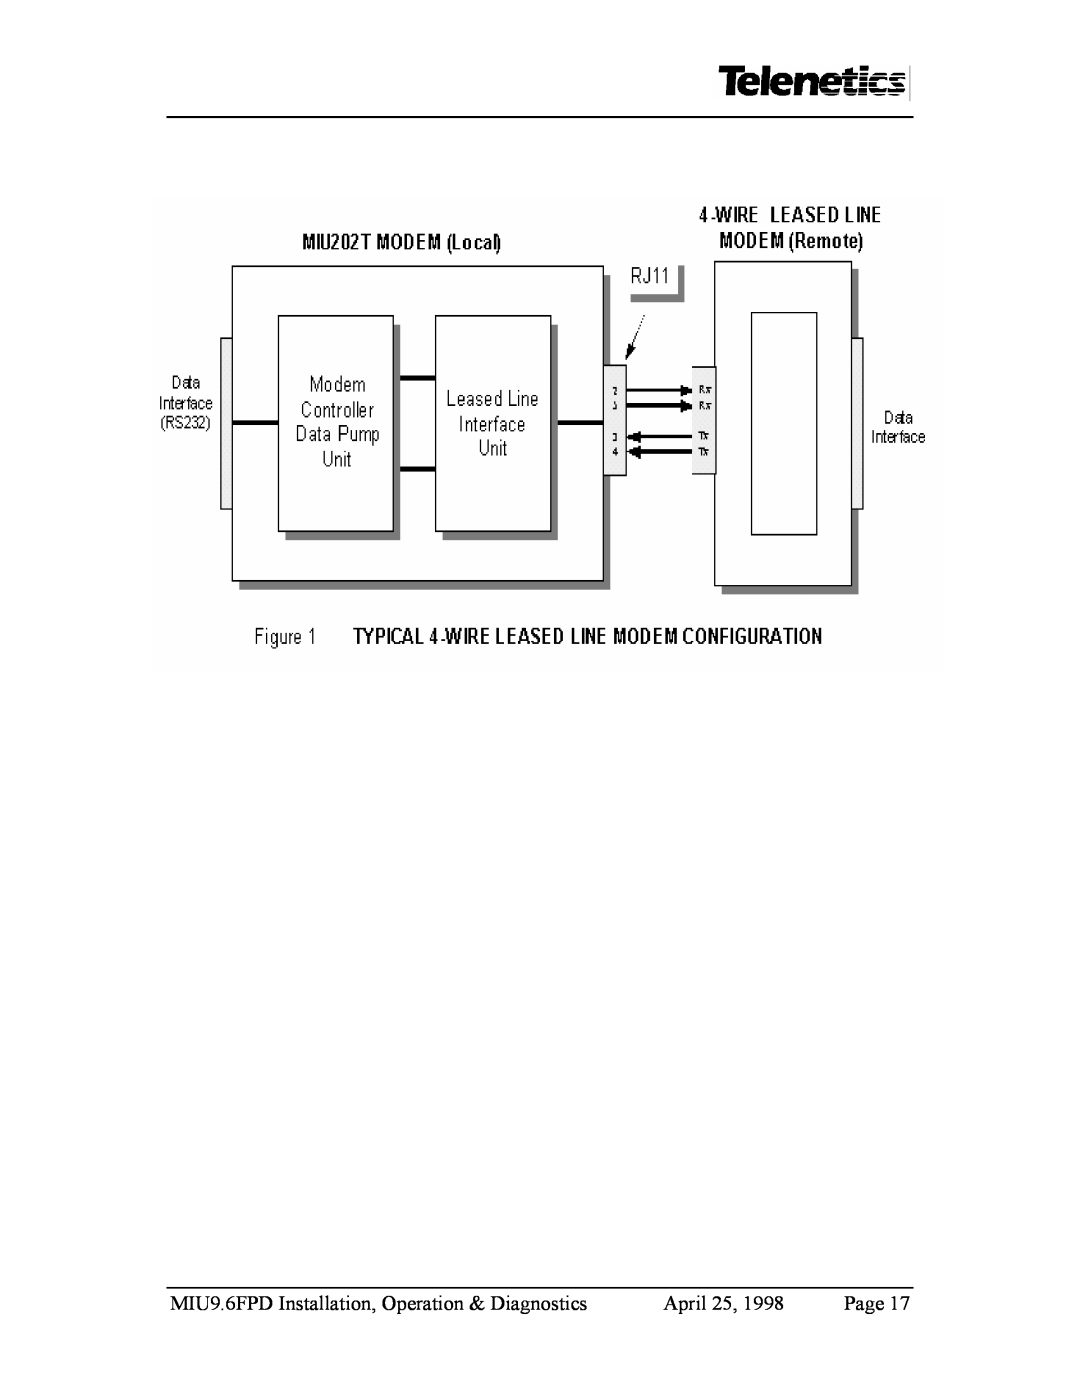 Telenetics manual MIU9.6FPD Installation, Operation & Diagnostics, April, Page 